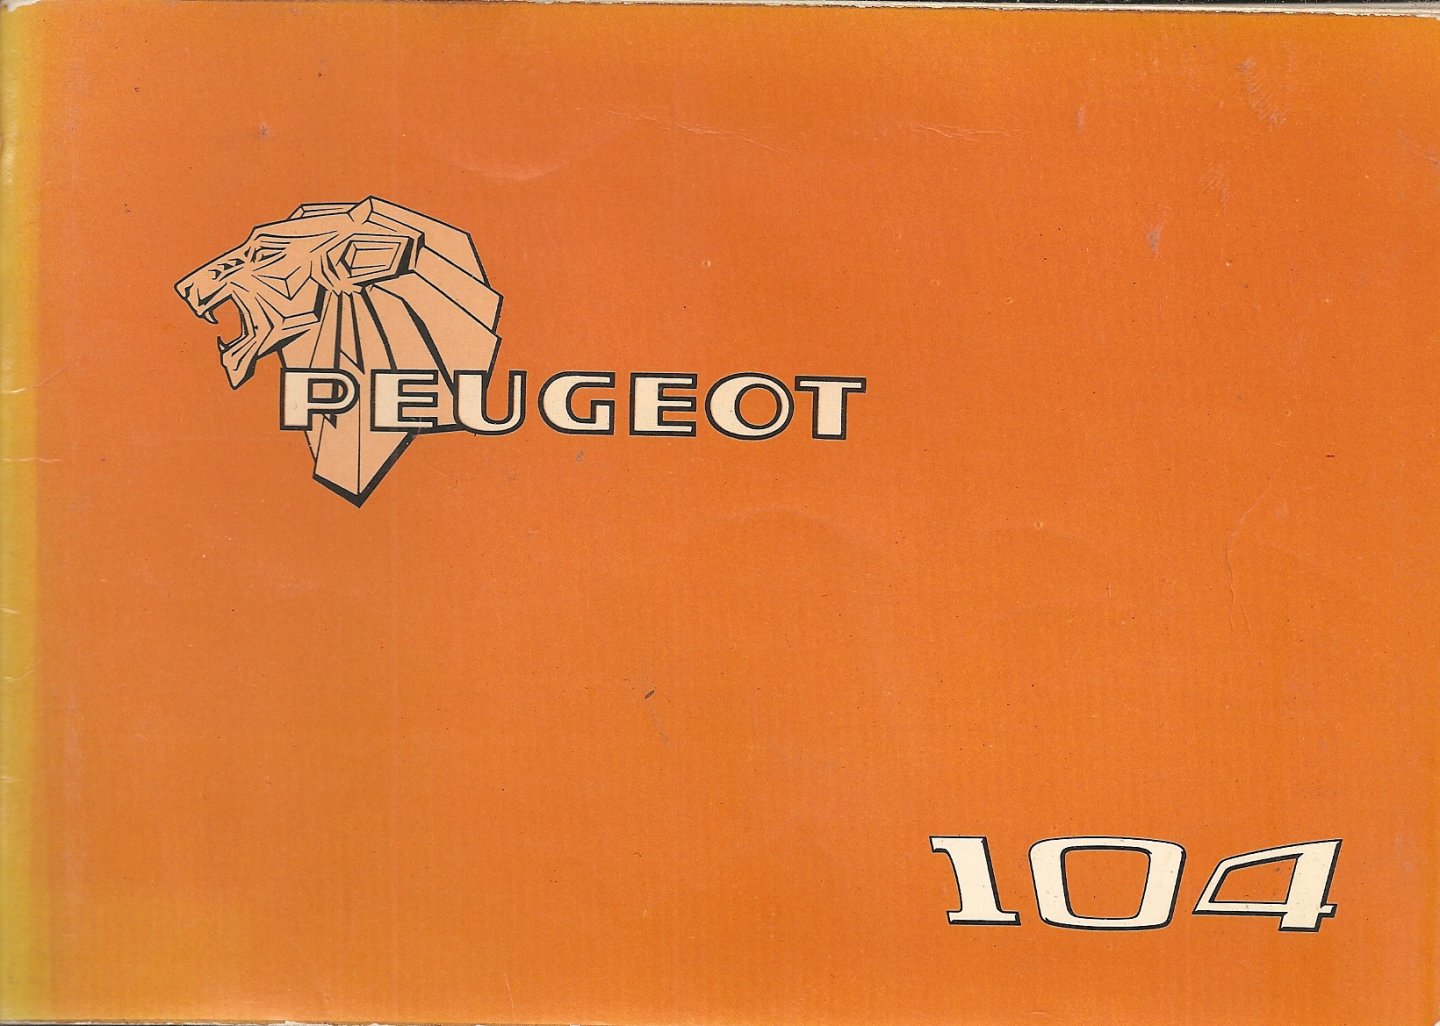 NN - Peugeot 104.